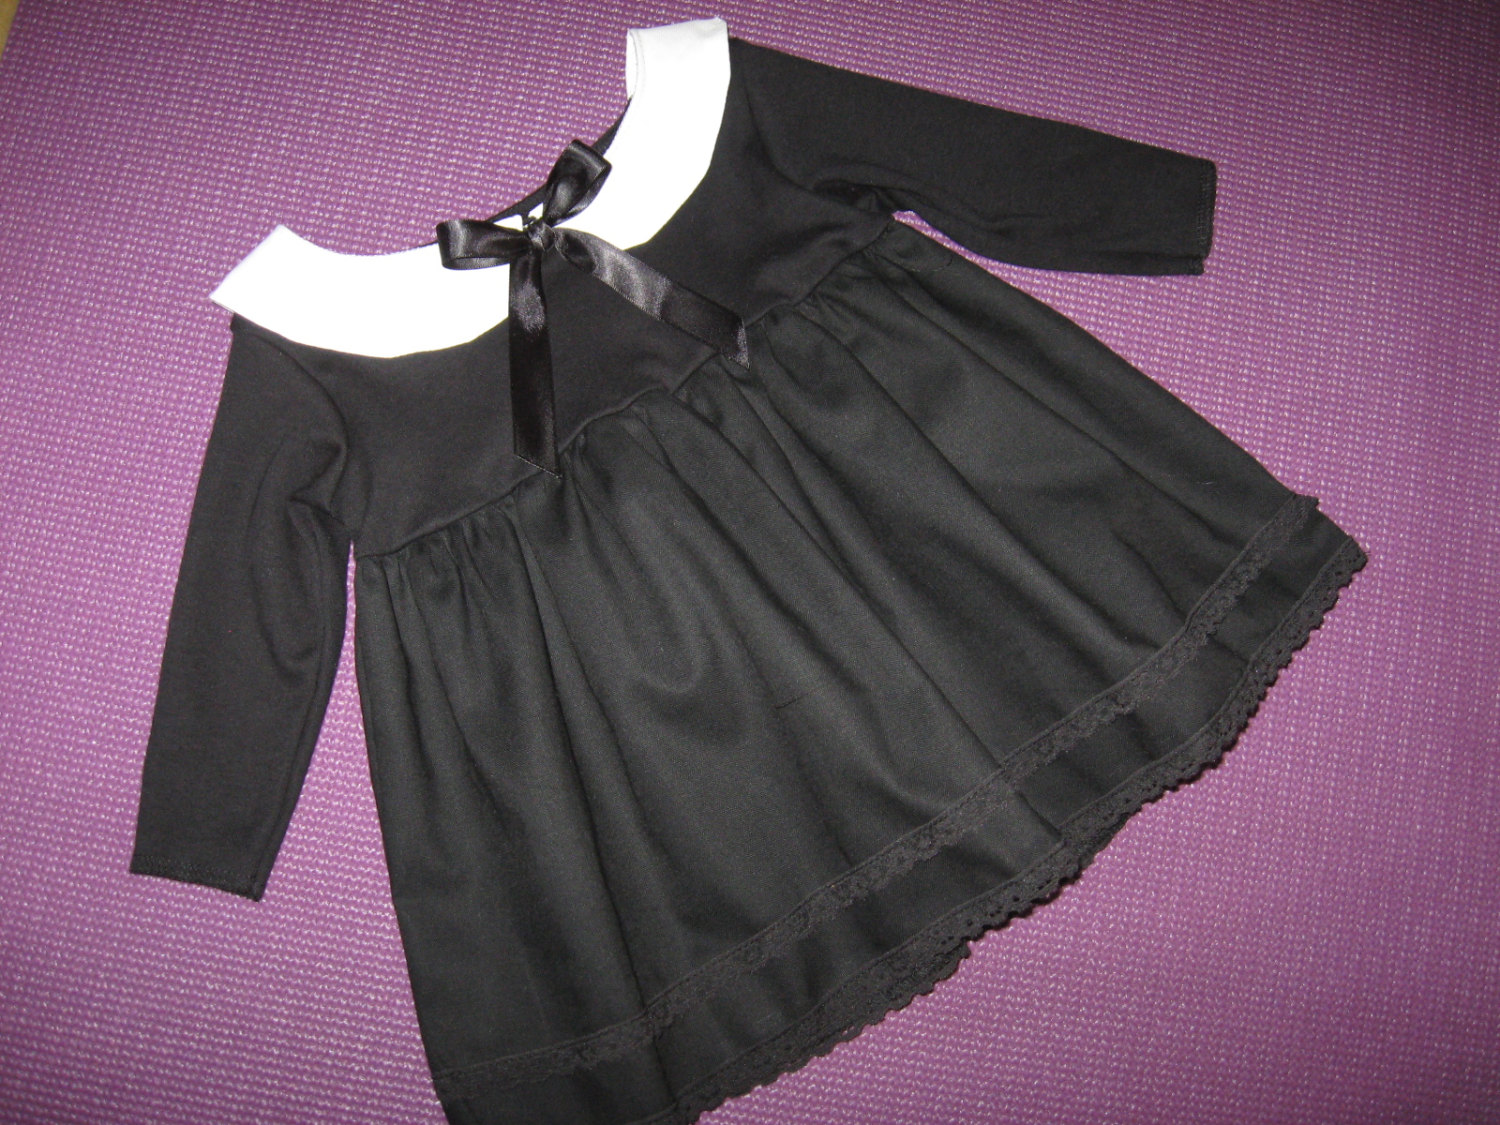 Kleding Meisjeskleding Babykleding voor meisjes Jurken Zwarte witte kraag Jurk Sequoia NIEUWE Gothic Baby meisjes kant Hoofdband set Gift Party Rock Halloween woensdag 